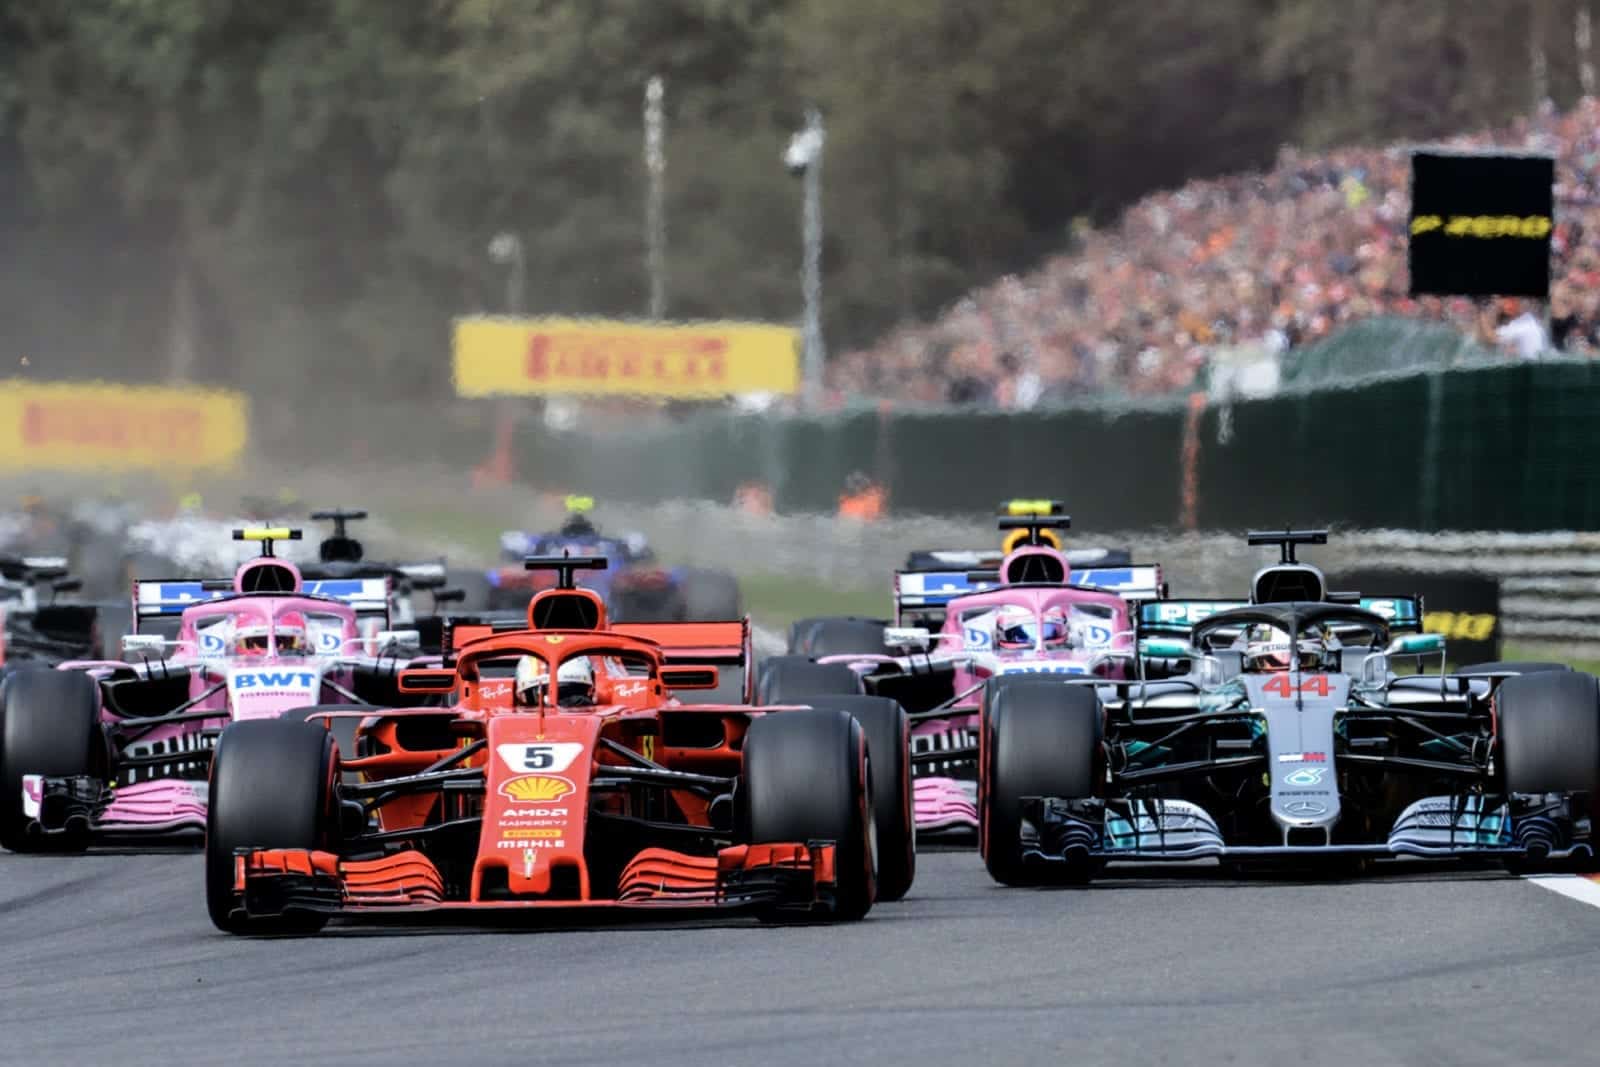 2019 Belgian Grand Prix start